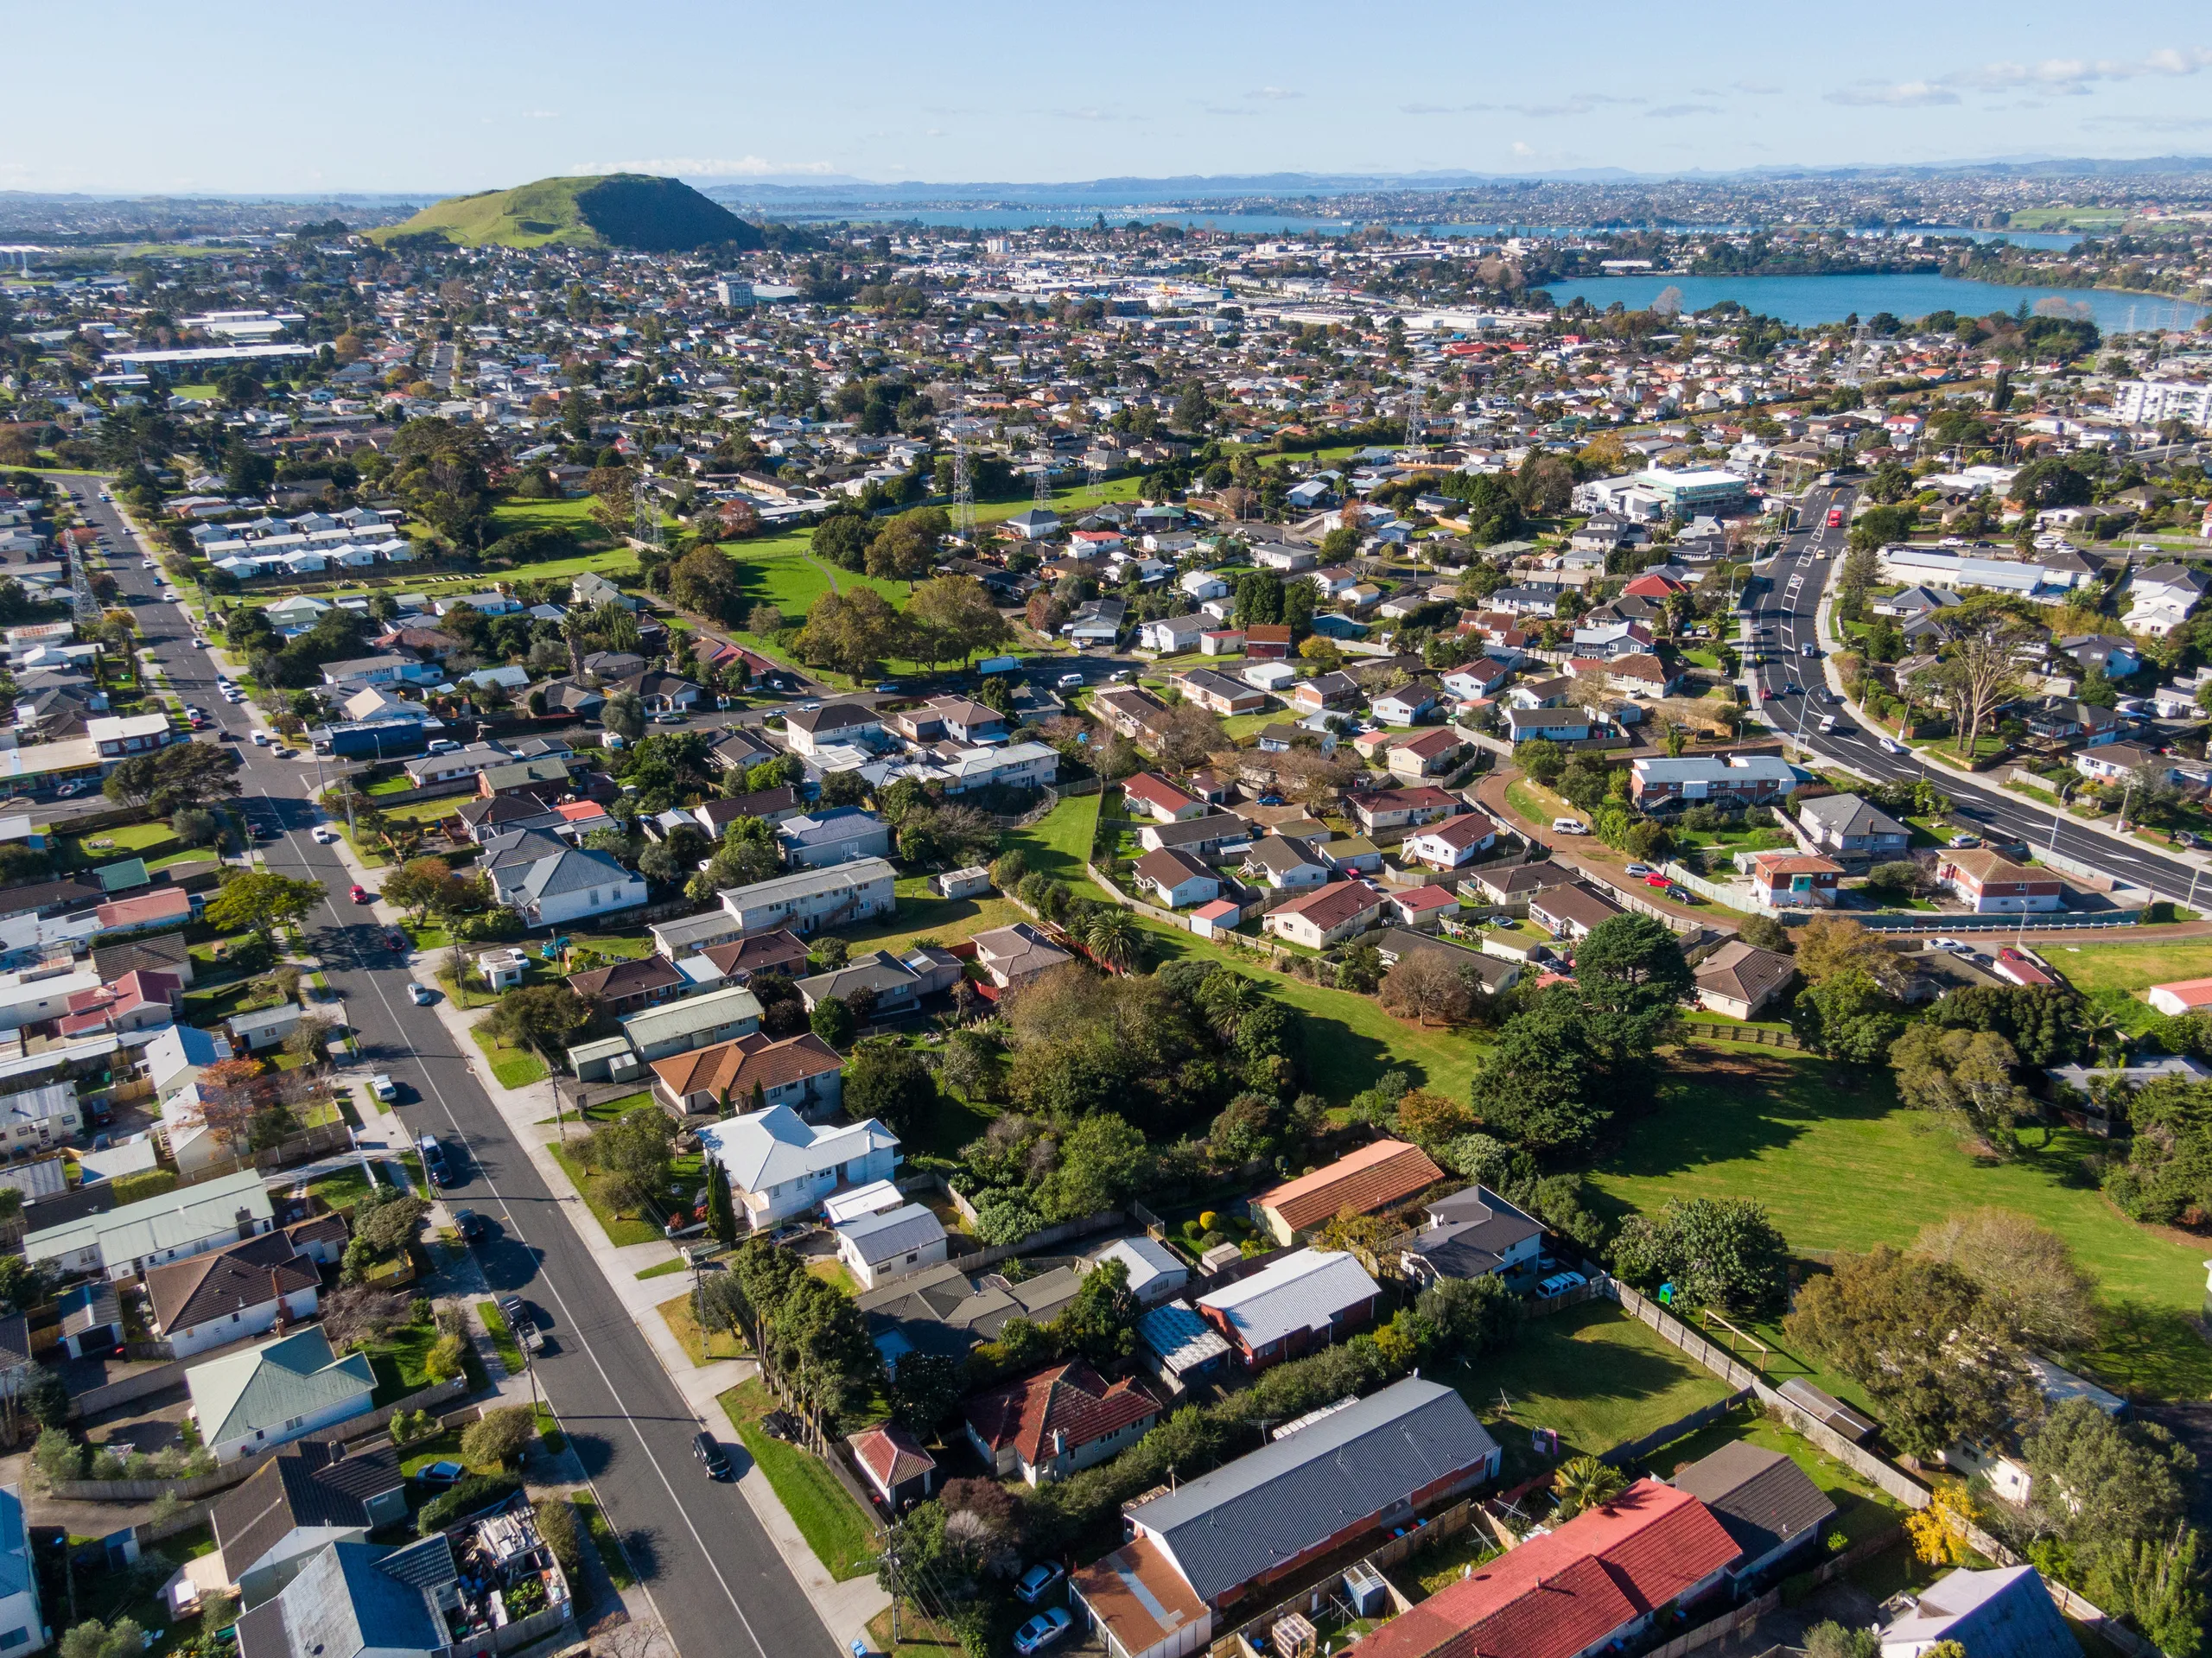 A,B,C/21 Panorama Road, Mount Wellington, Auckland City